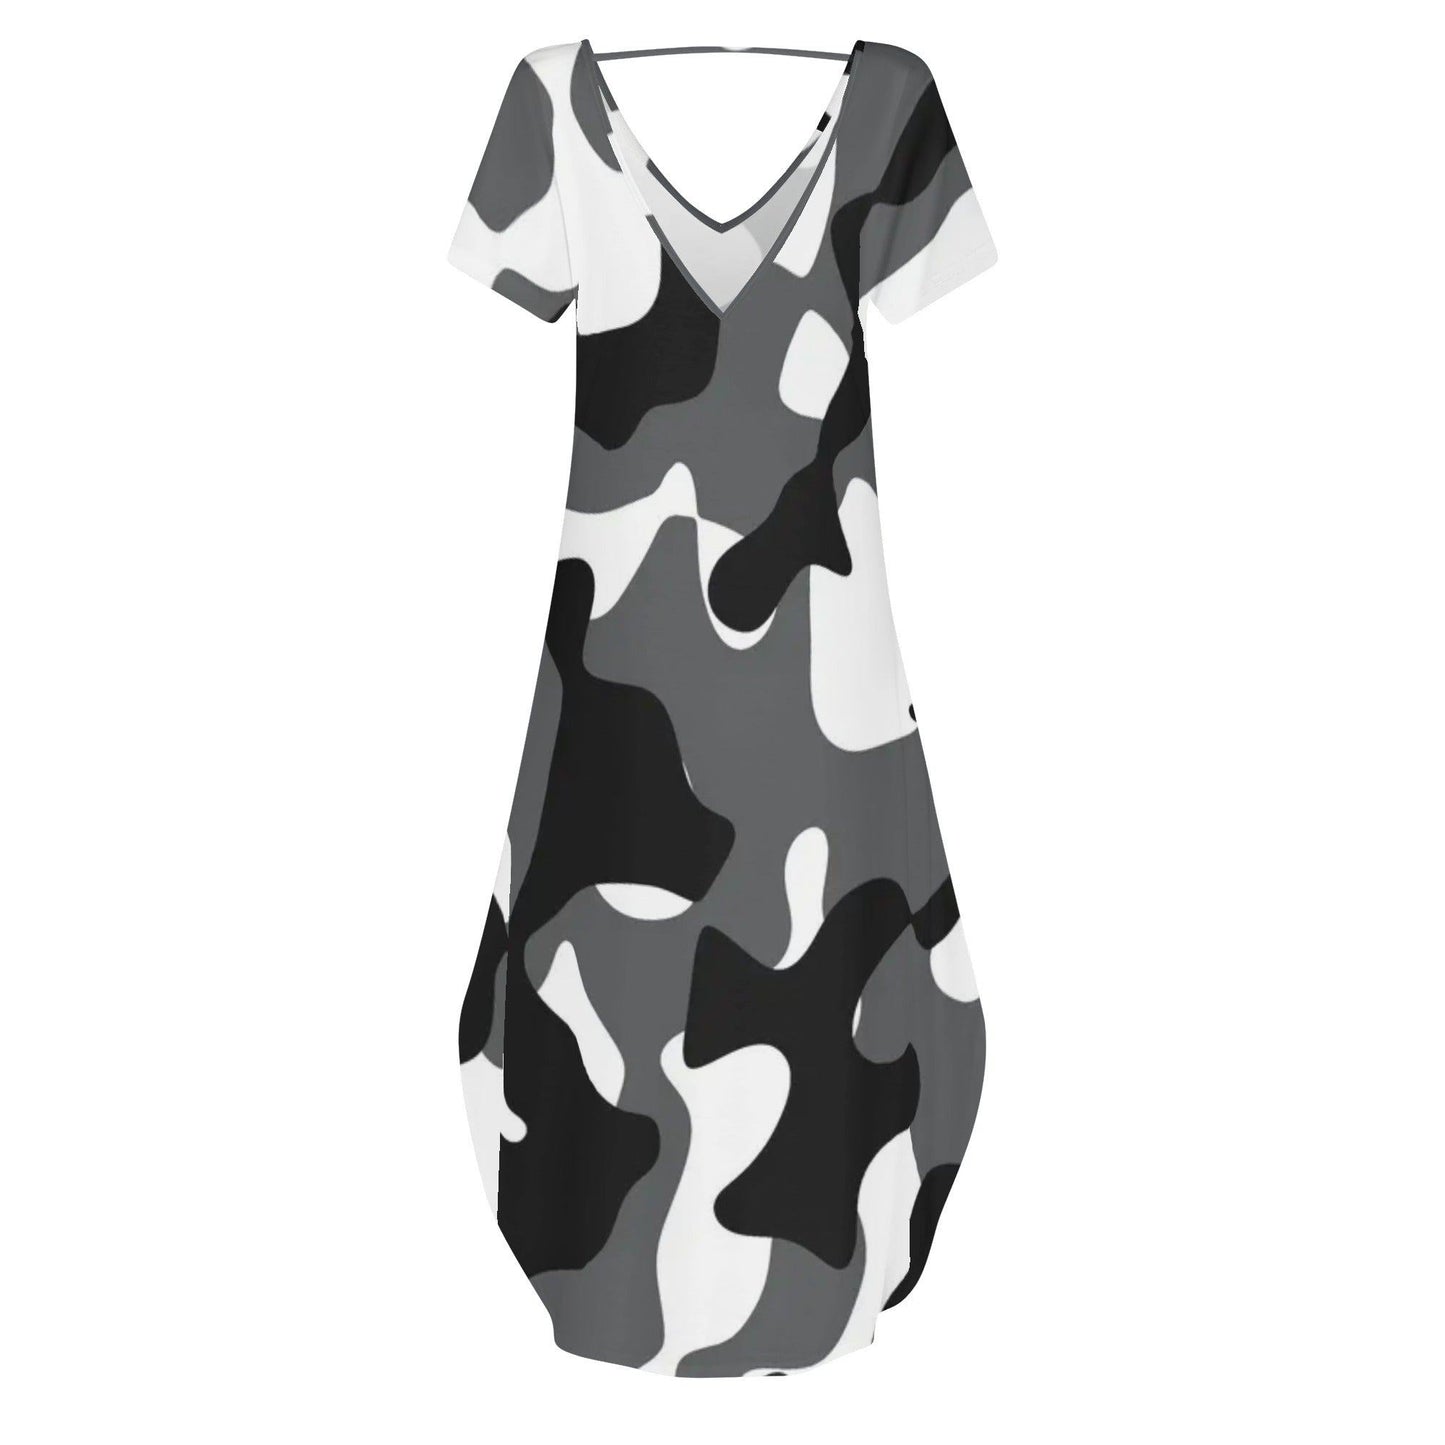 Schwarz Grau Weiß Camouflage kurzärmliges drapiertes Kleid drapiertes Kleid 63.99 Camouflage, drapiert, Grau, kleid, kurzärmlig, Laufschuhe, schwarz, Weiß JLR Design